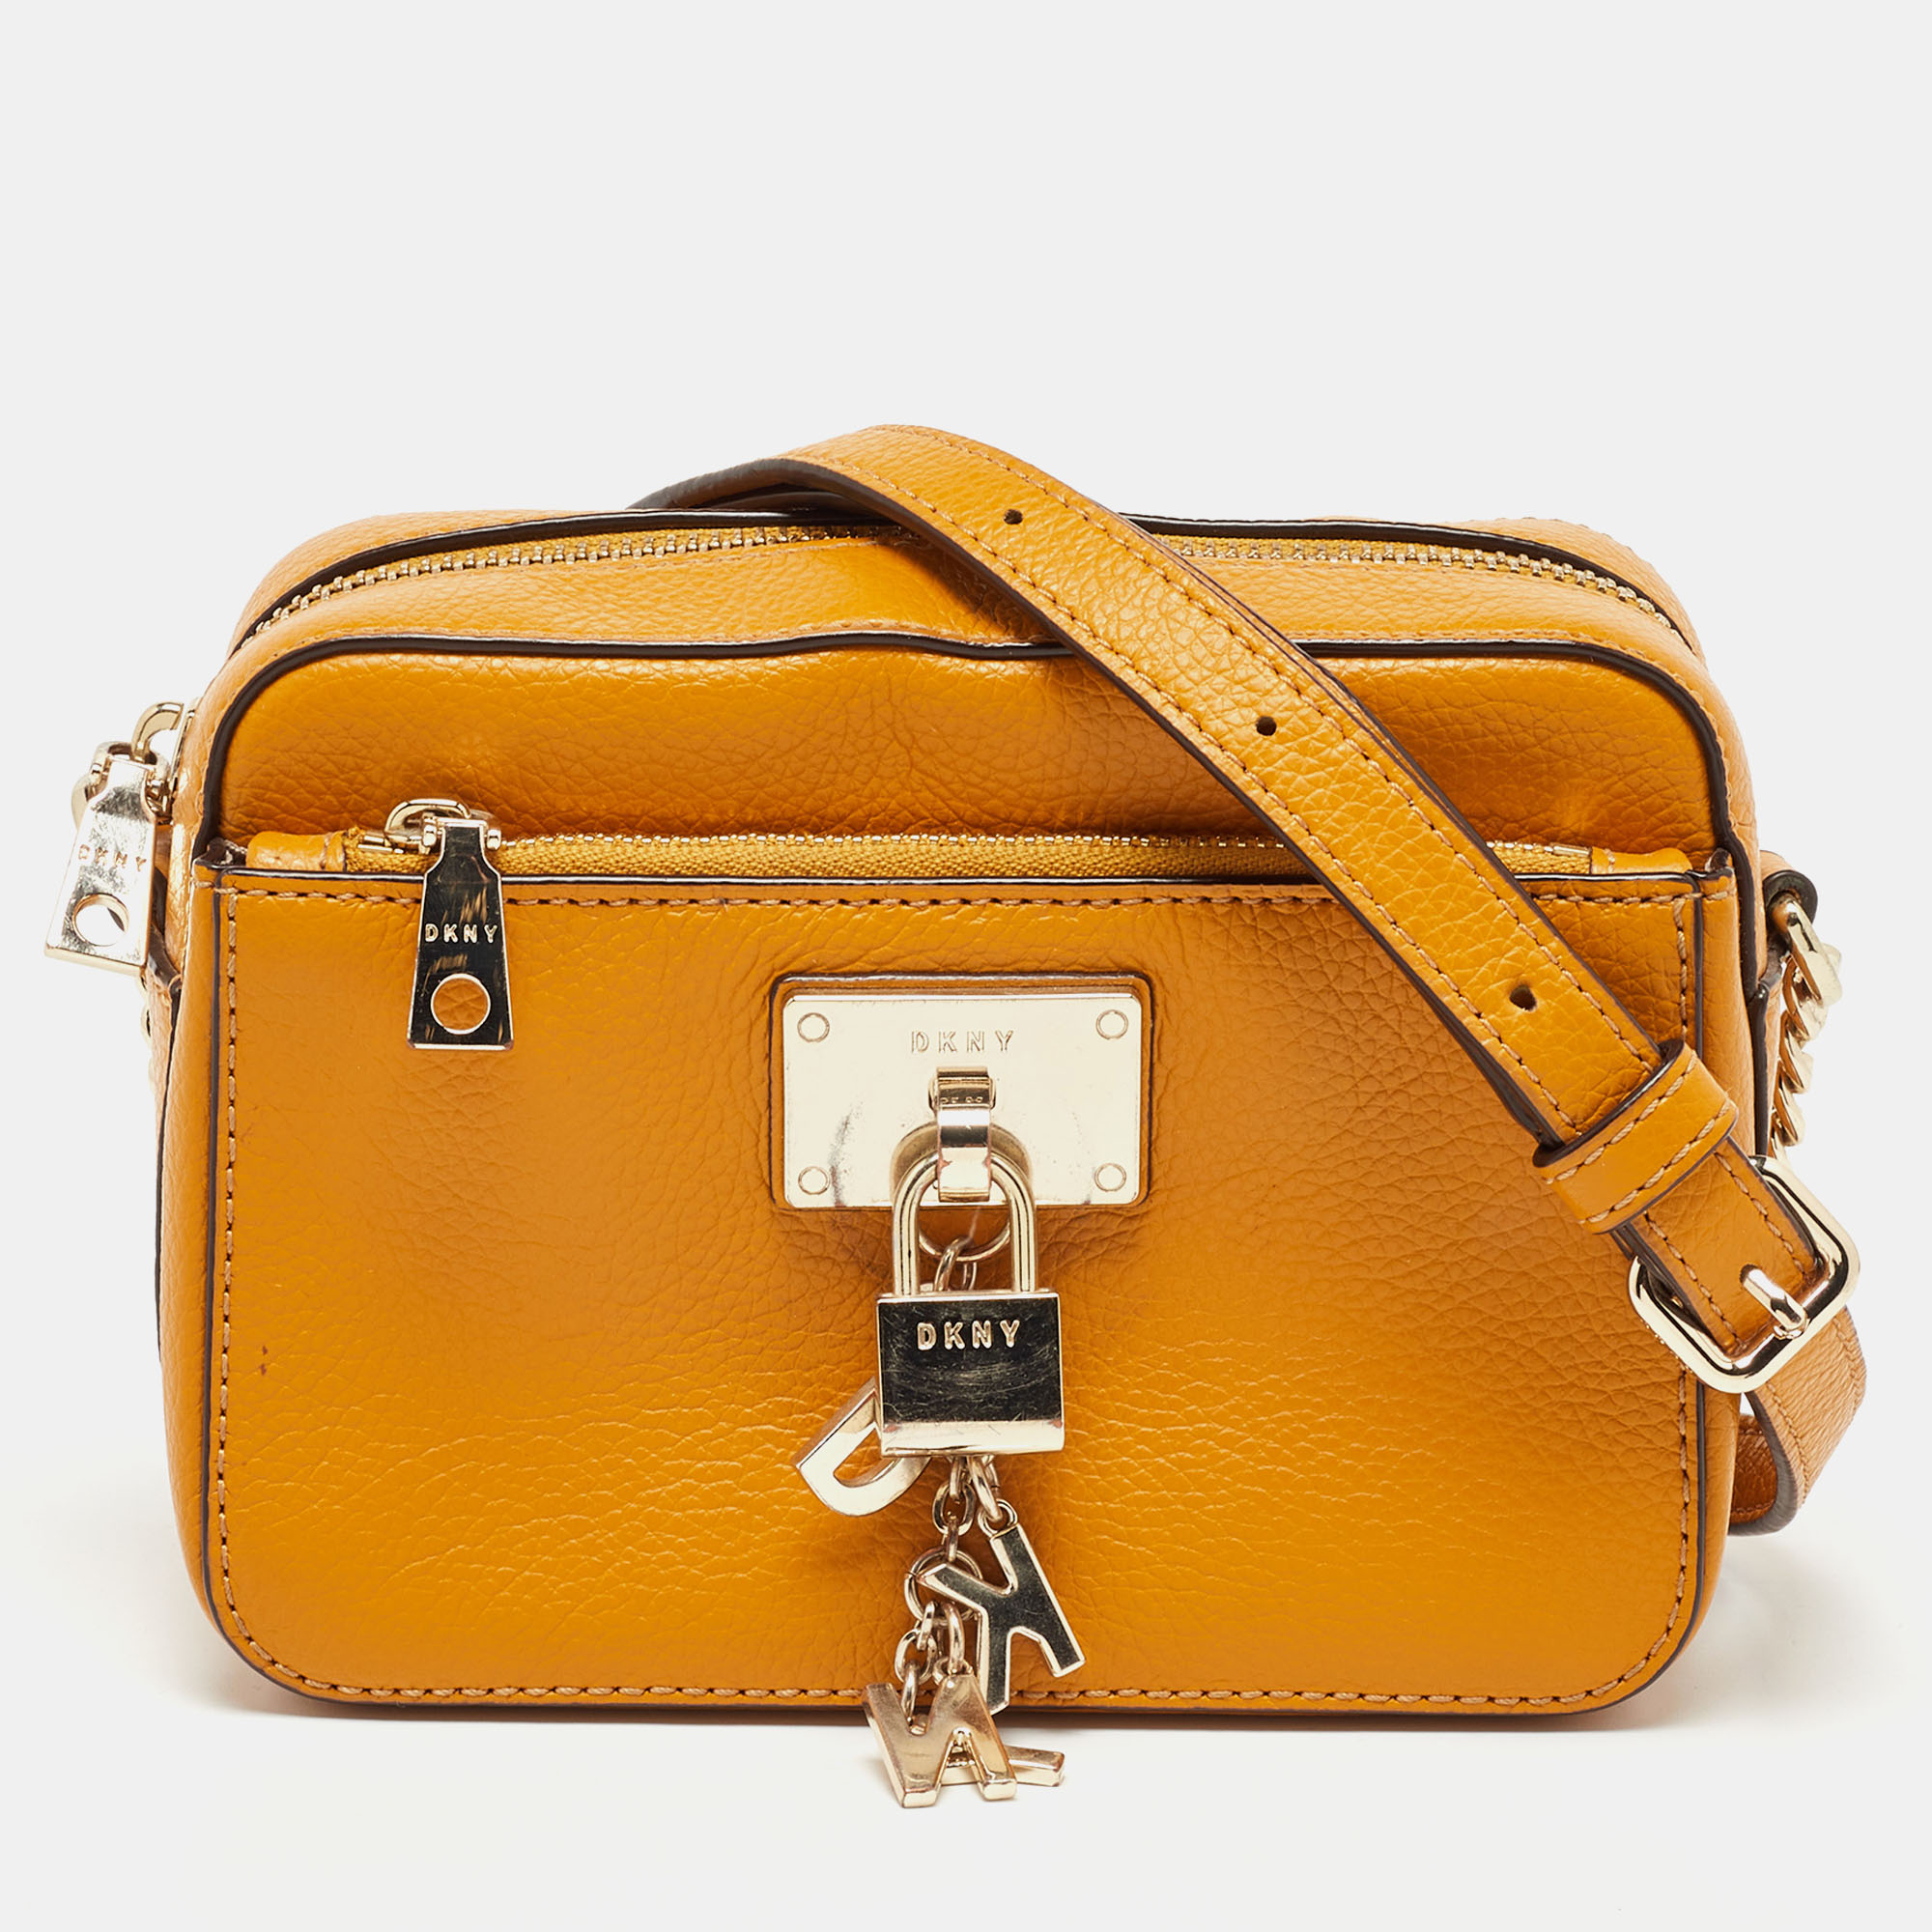 Dkny mustard leather padlock charm camera bag